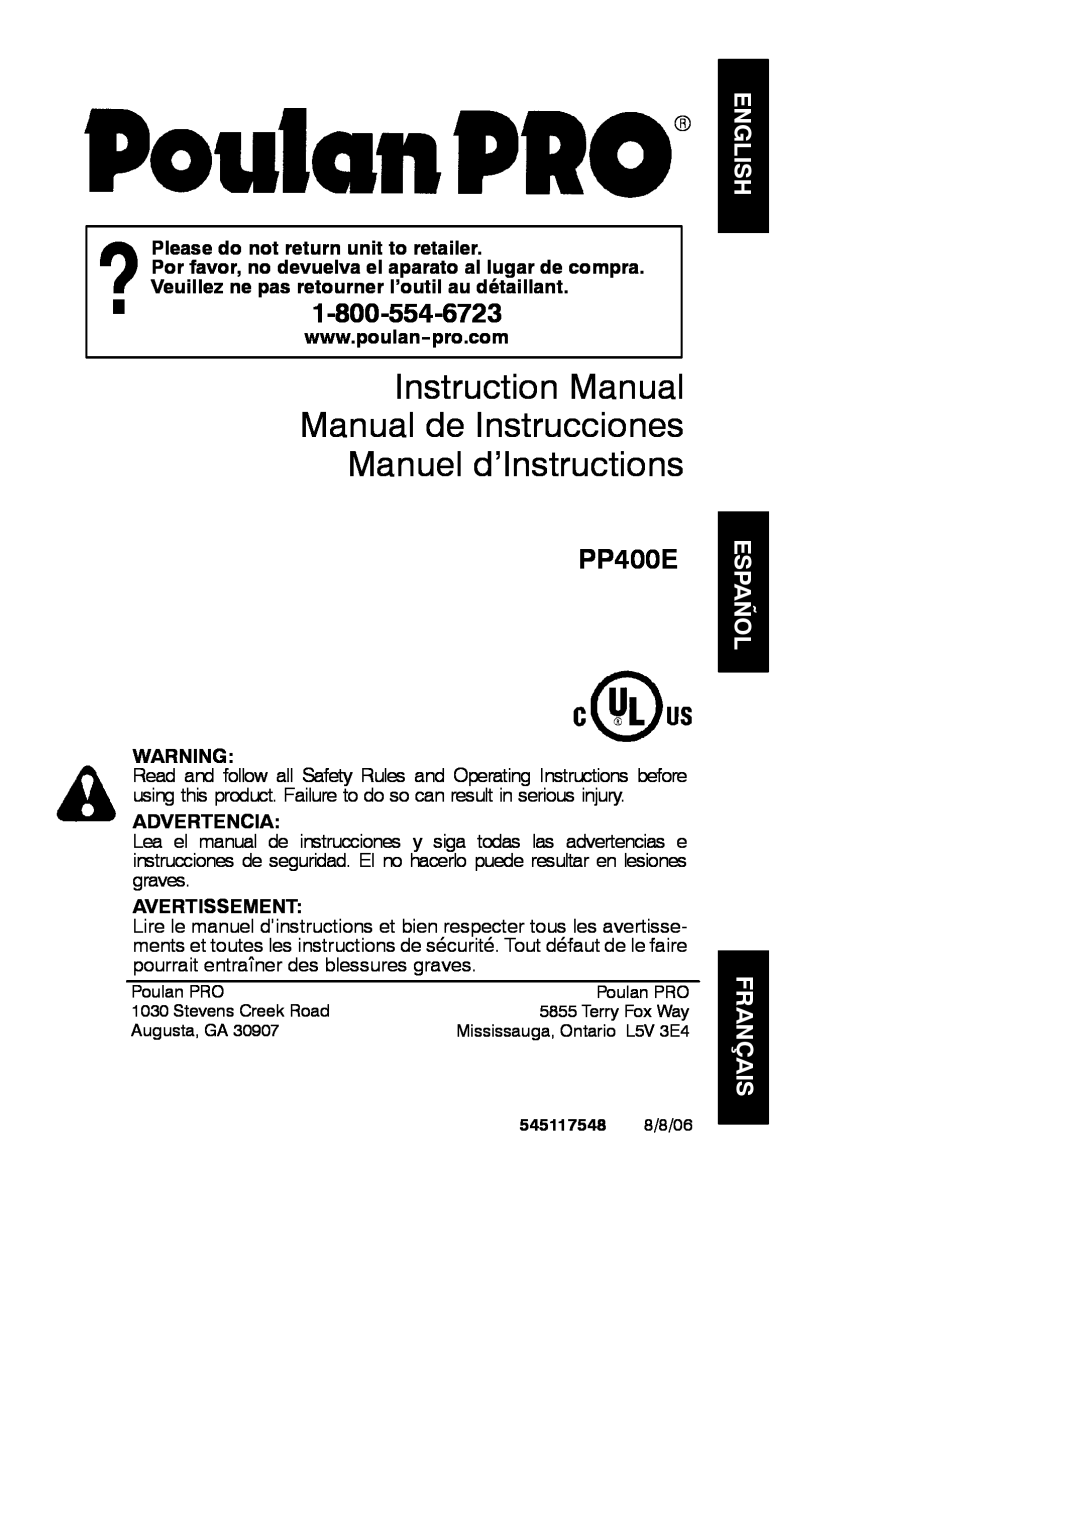 Poulan 545117548 instruction manual English, Español, Français, PP400E, Please do not return unit to retailer, Advertencia 